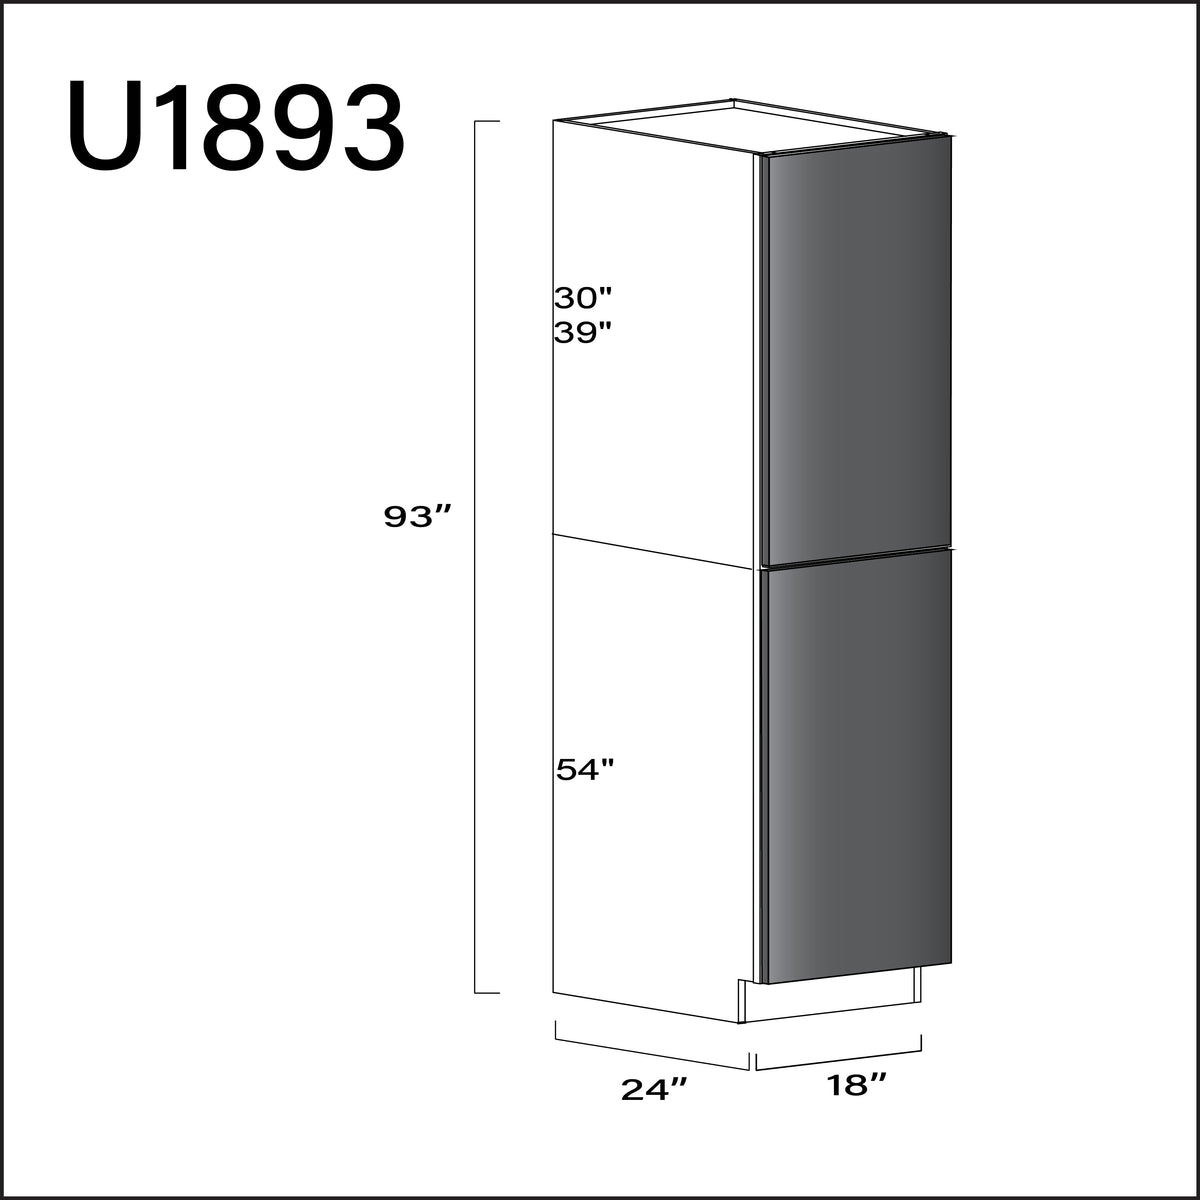 Glossy Gray Frameless Single Door Pantry Cabinet - 18" W x 93" H x 24" D